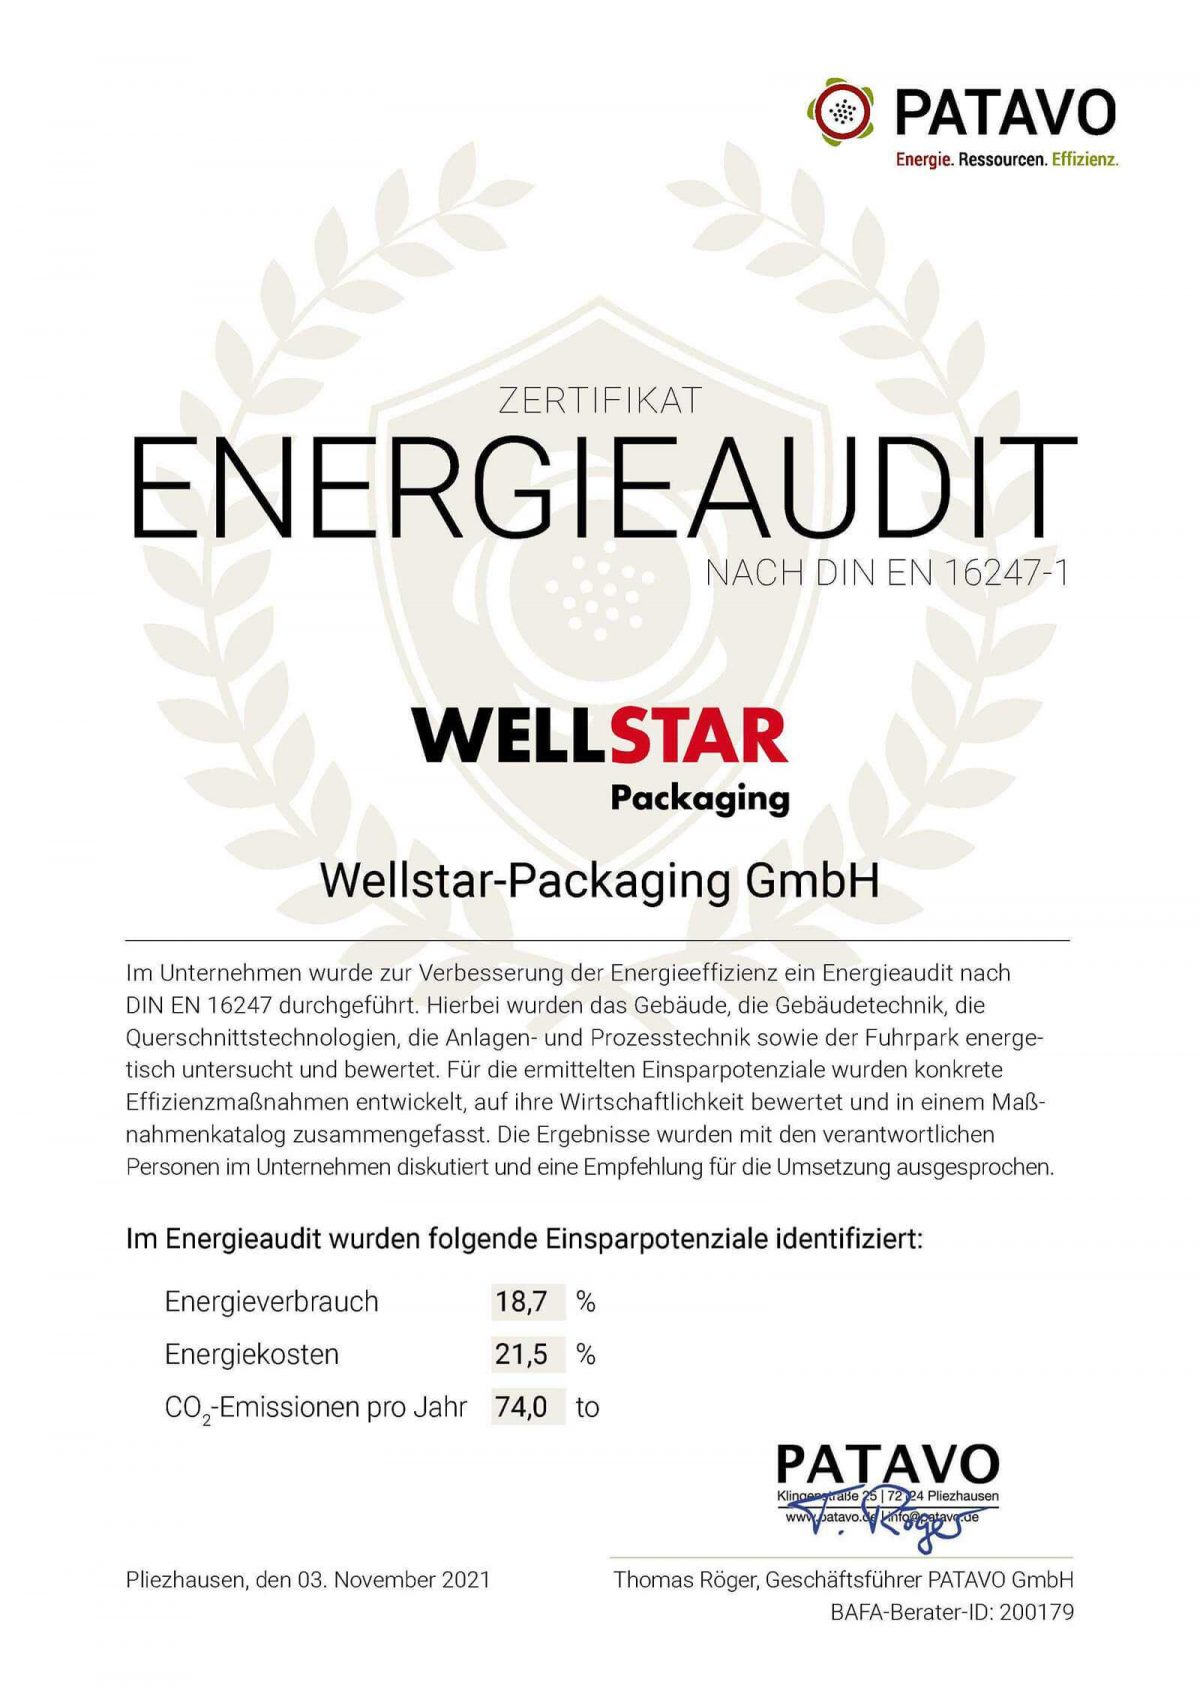 Zertifikat Energieaudit Wellstar-Packaging